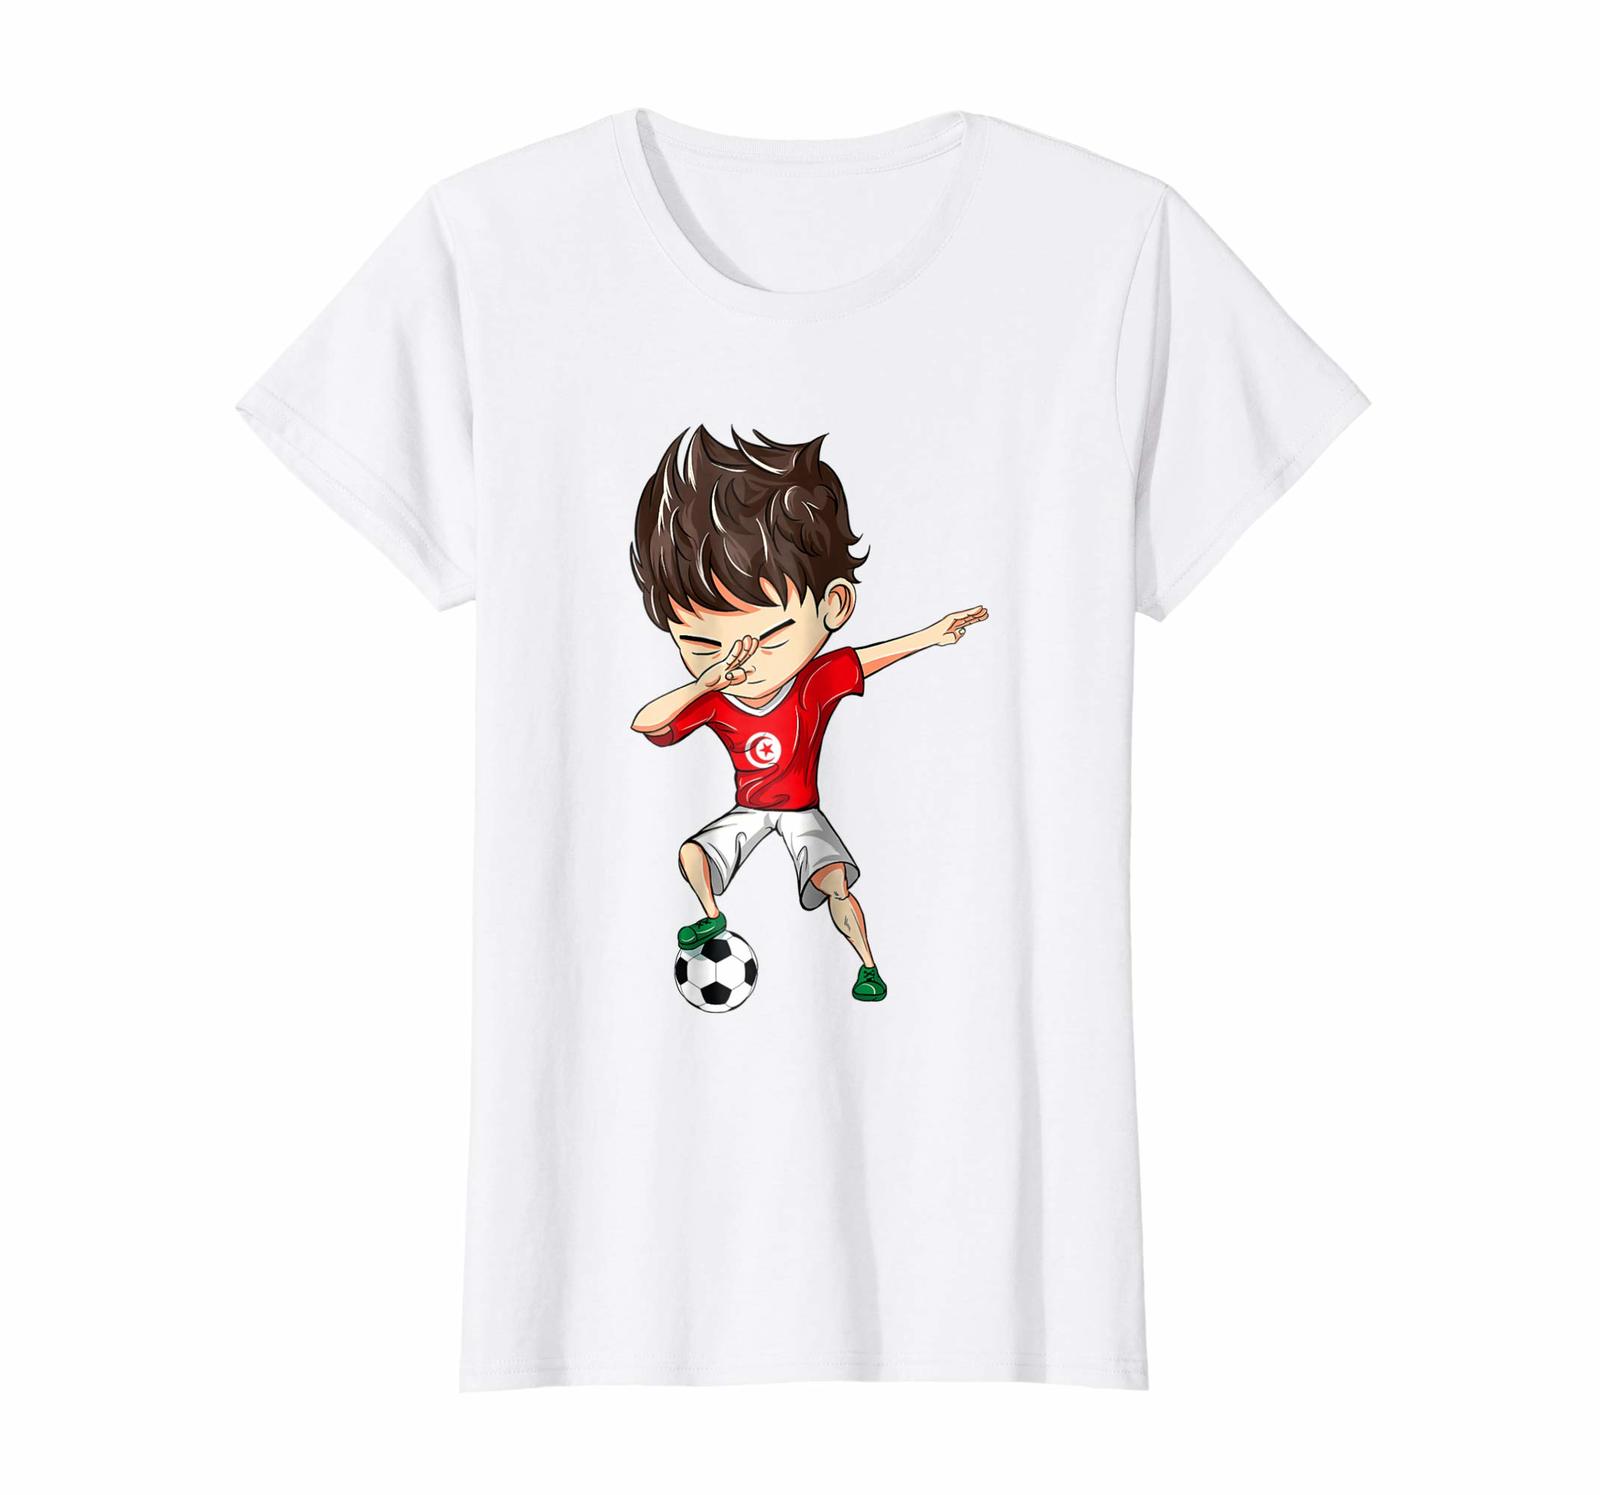 Sport Shirts - Dabbing Soccer Boy Tunisia Jersey Shirt -Tunisia Football Wowen - $19.95 - $23.95